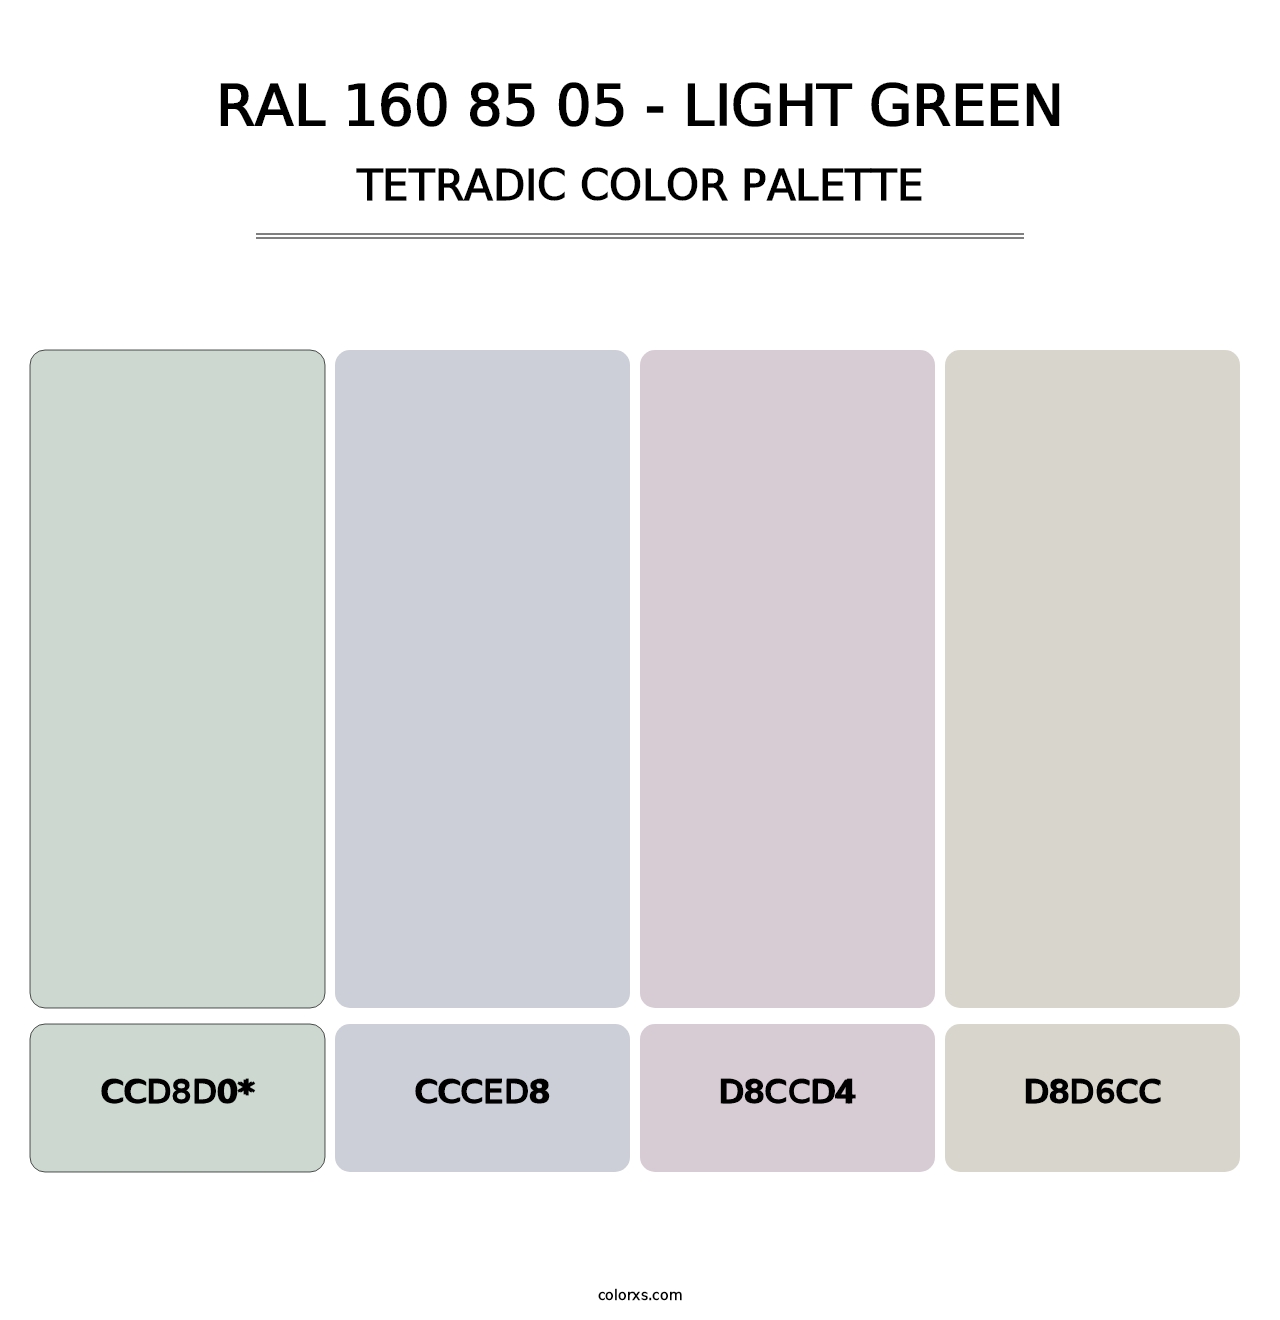 RAL 160 85 05 - Light Green - Tetradic Color Palette